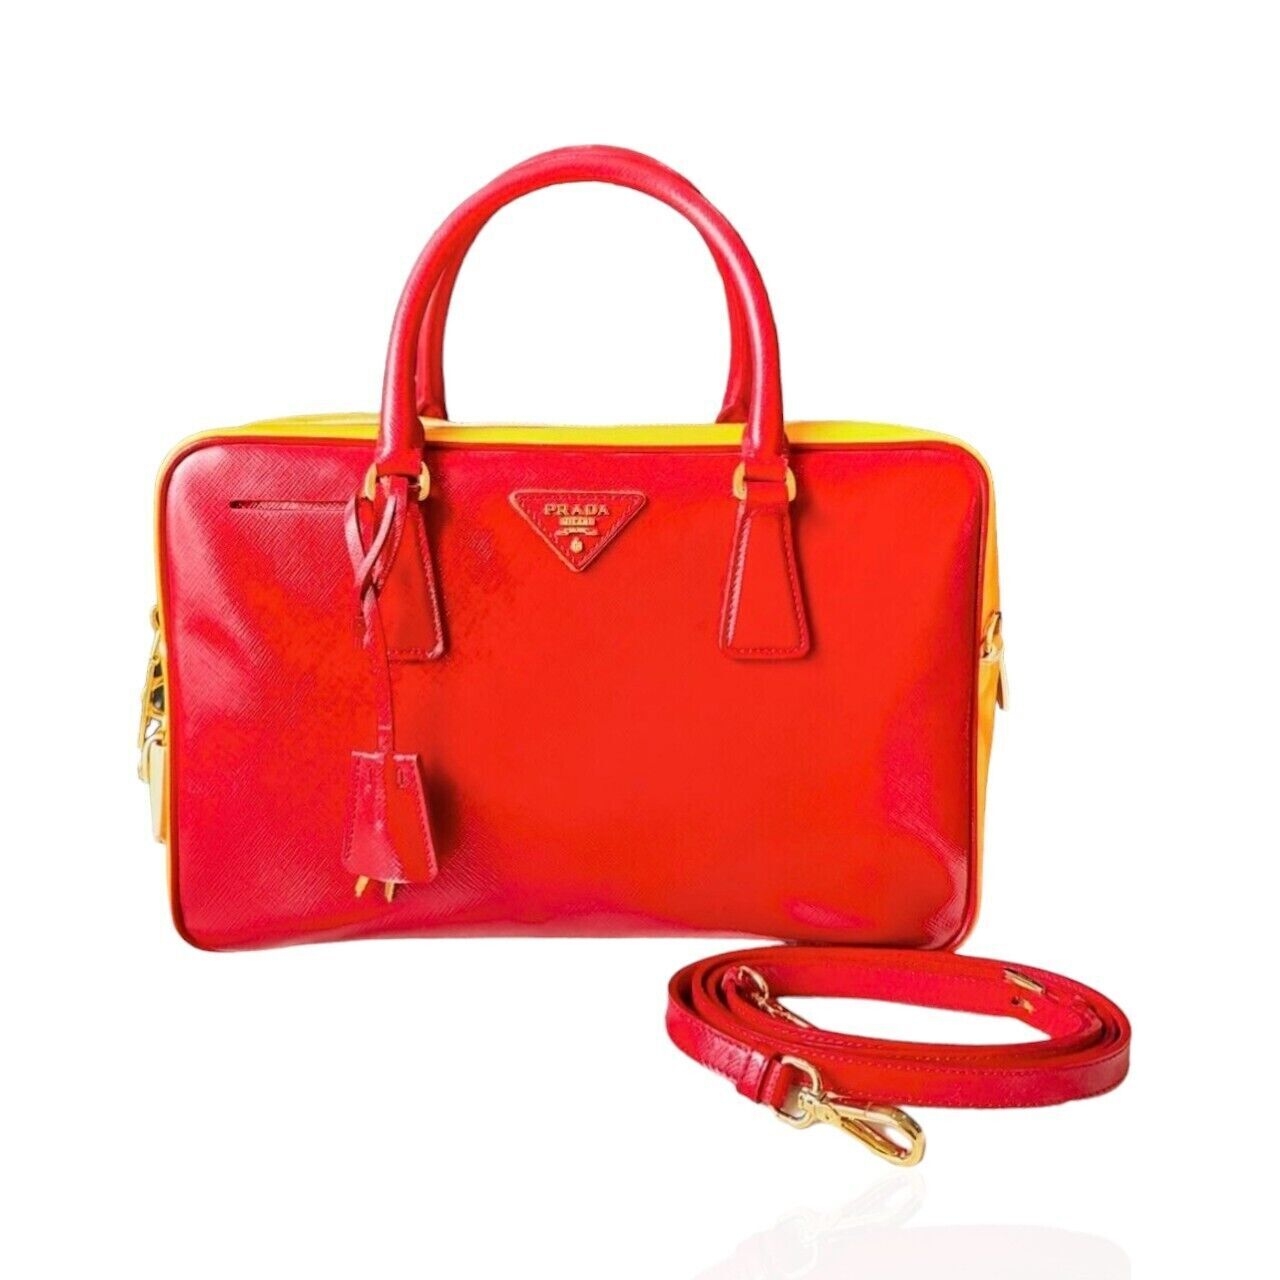 Prada Red & Yellow Handbag